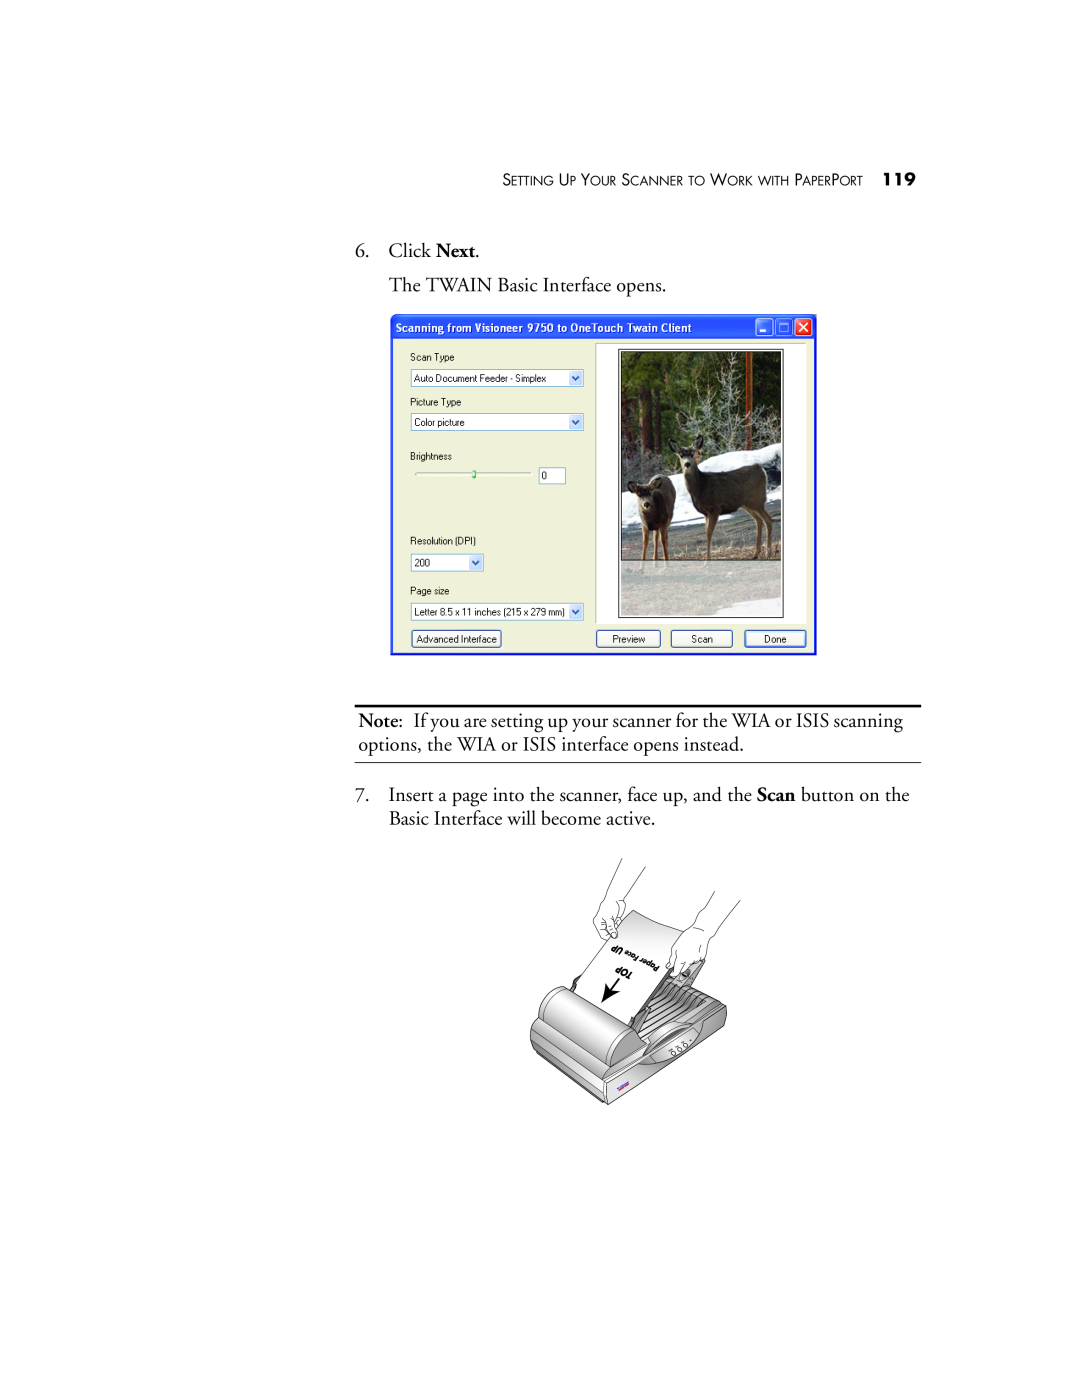 Visioneer 9750 manual Click Next The TWAIN Basic Interface opens 